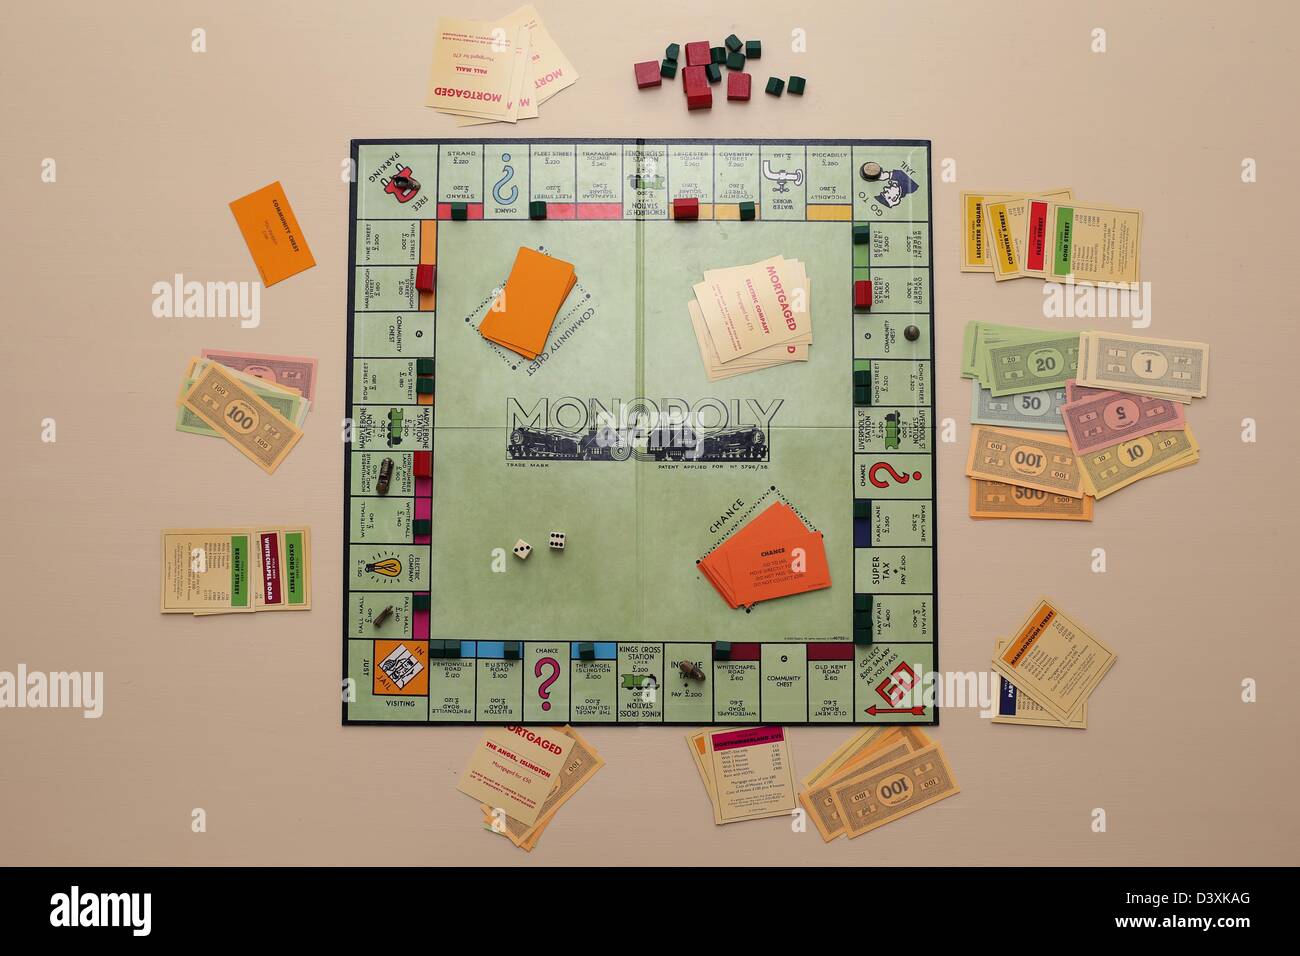 english-edition-of-the-monopoly-board-ga